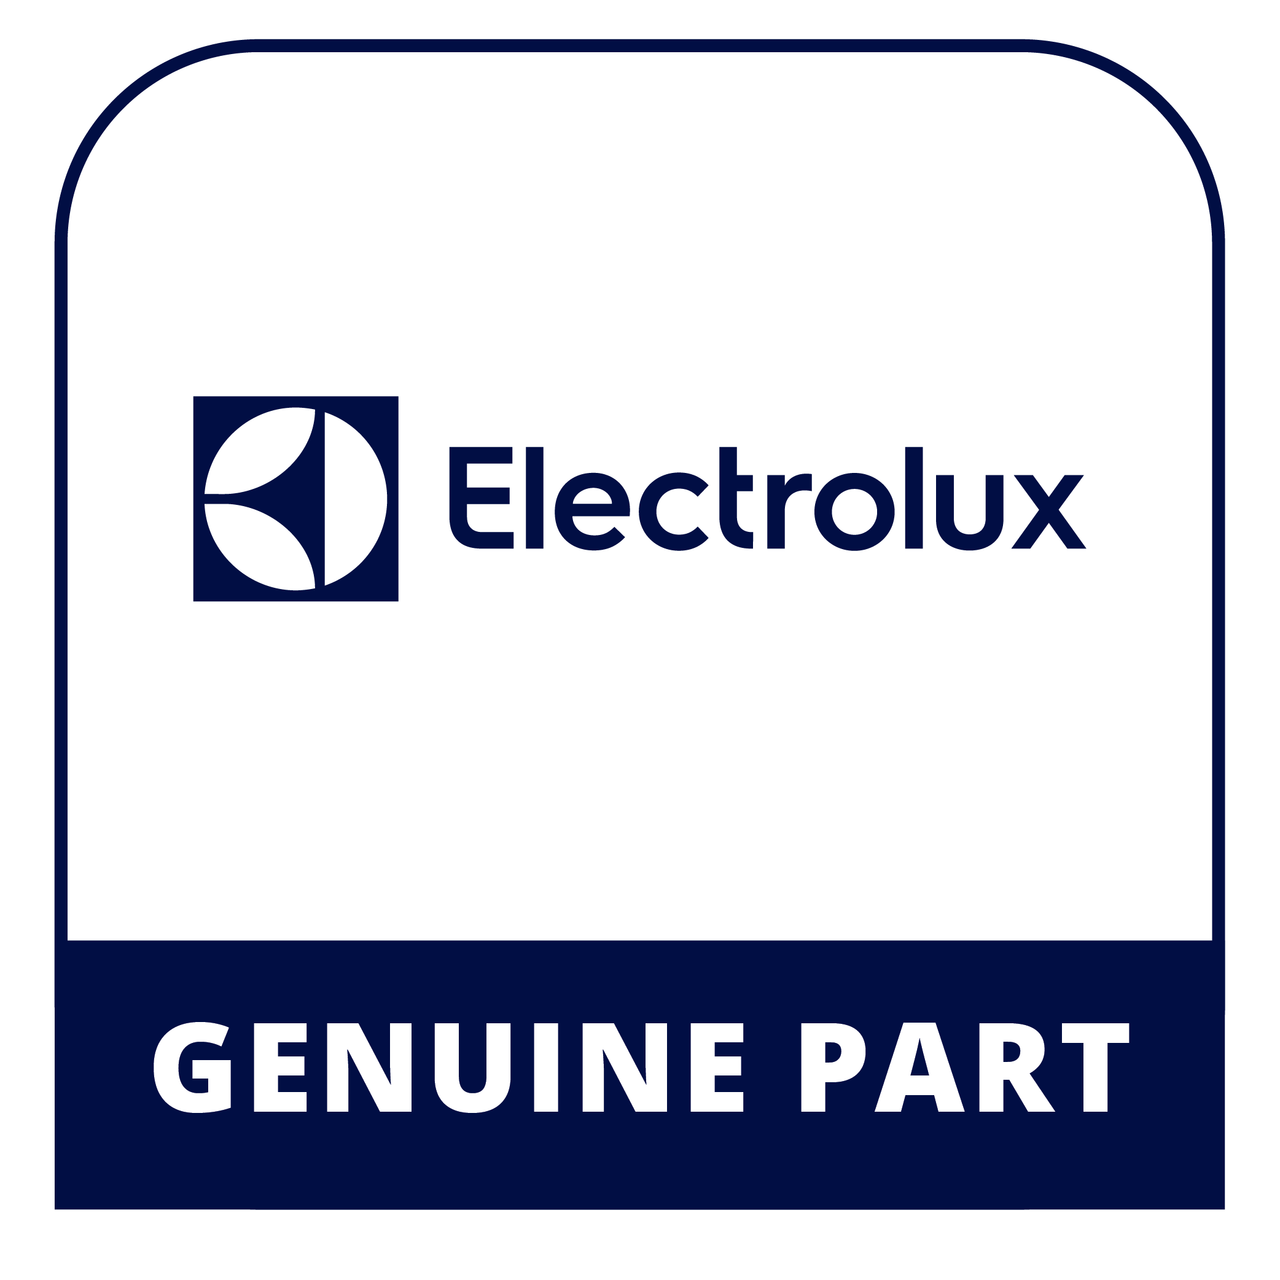 Frigidaire - Electrolux 5304501685 Control Panel Assem - Genuine Electrolux Part